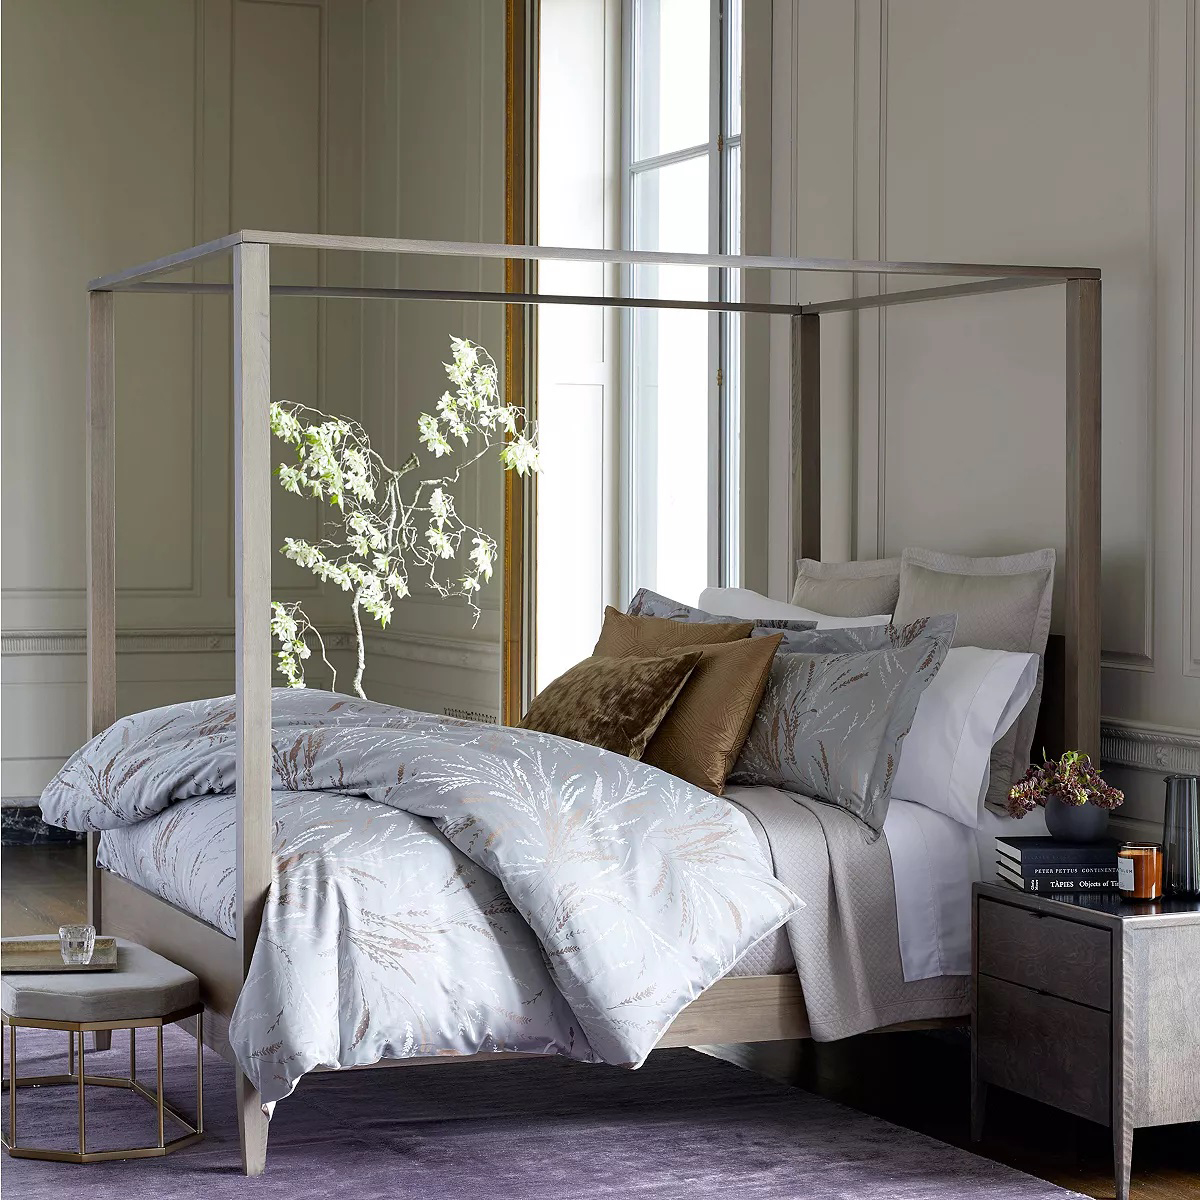 Frette Flourish Arredo Designer Luxury Bedding